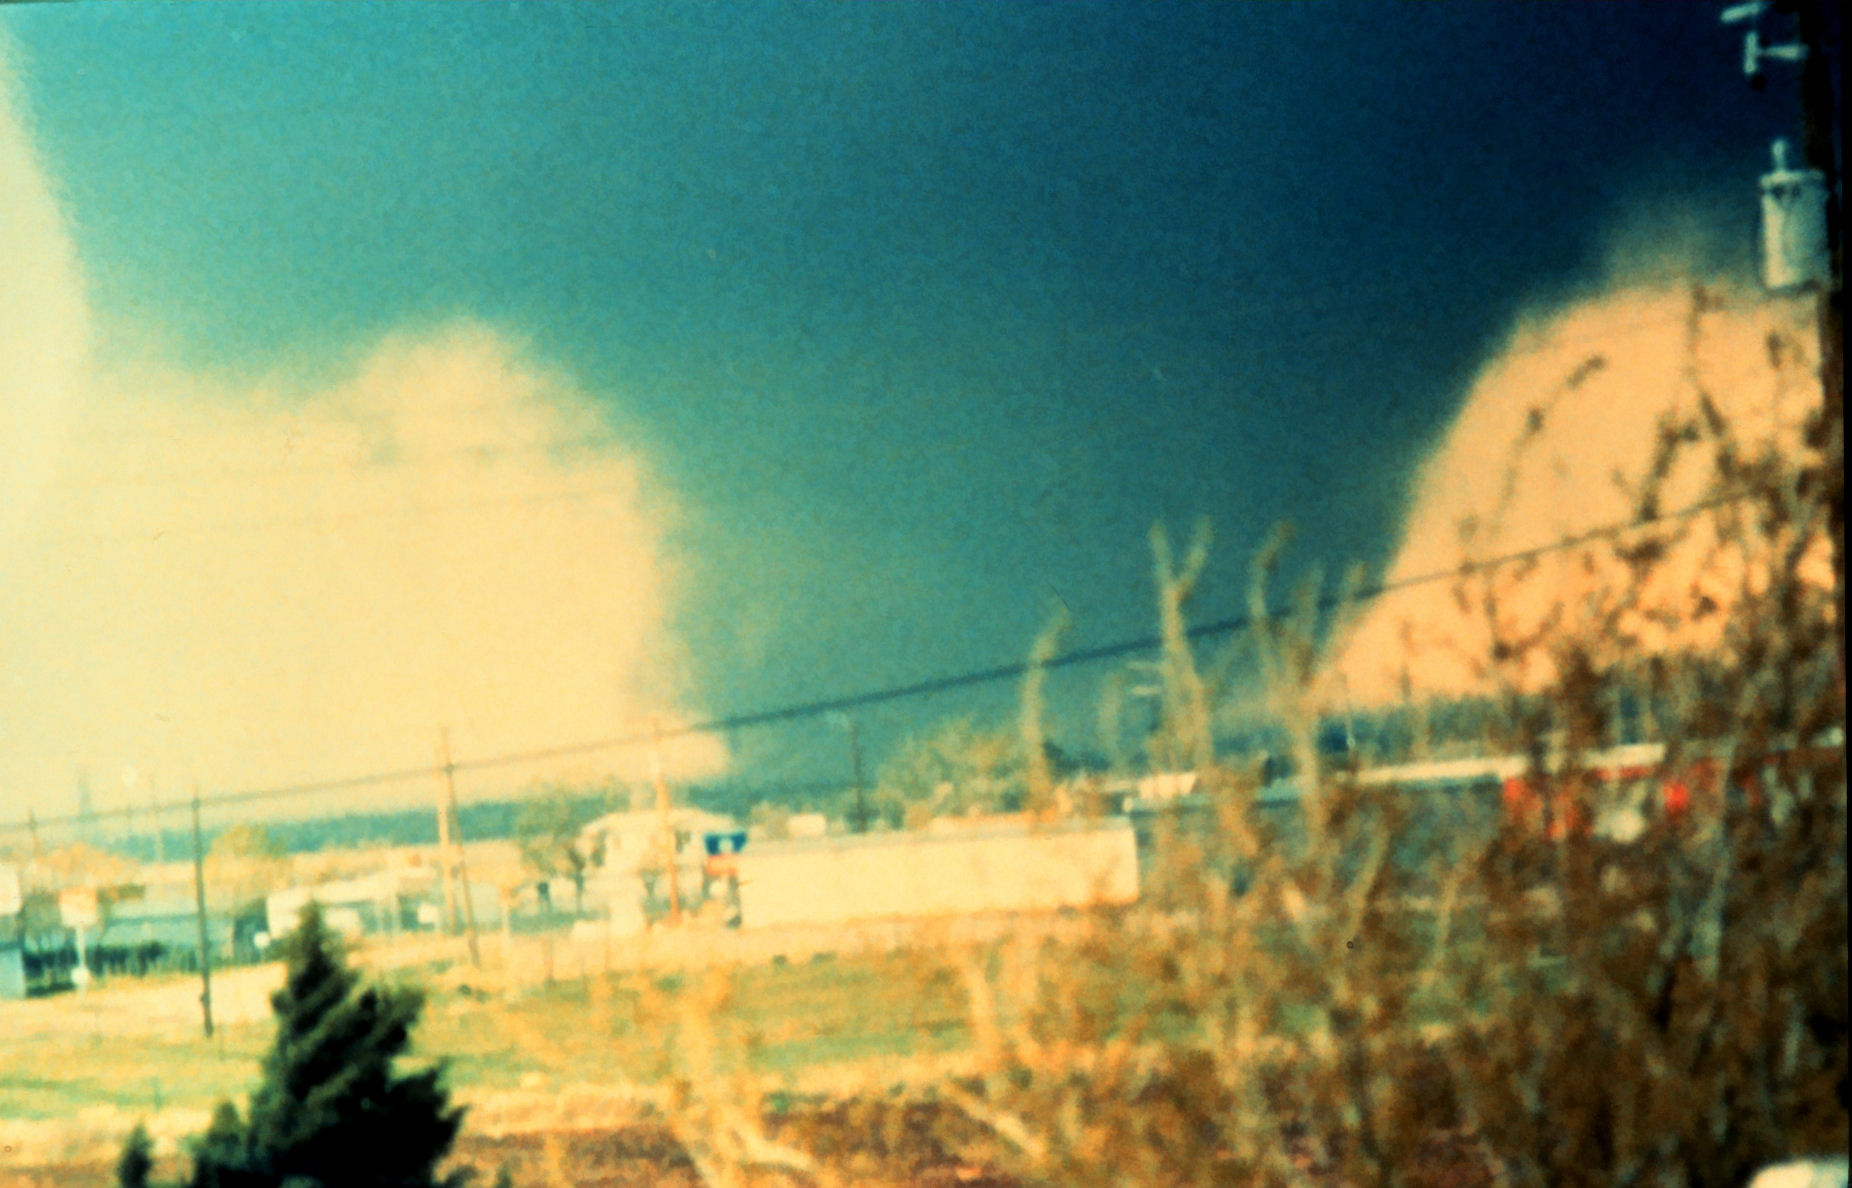 The large Wichita Falls F4 tornado moving through town.